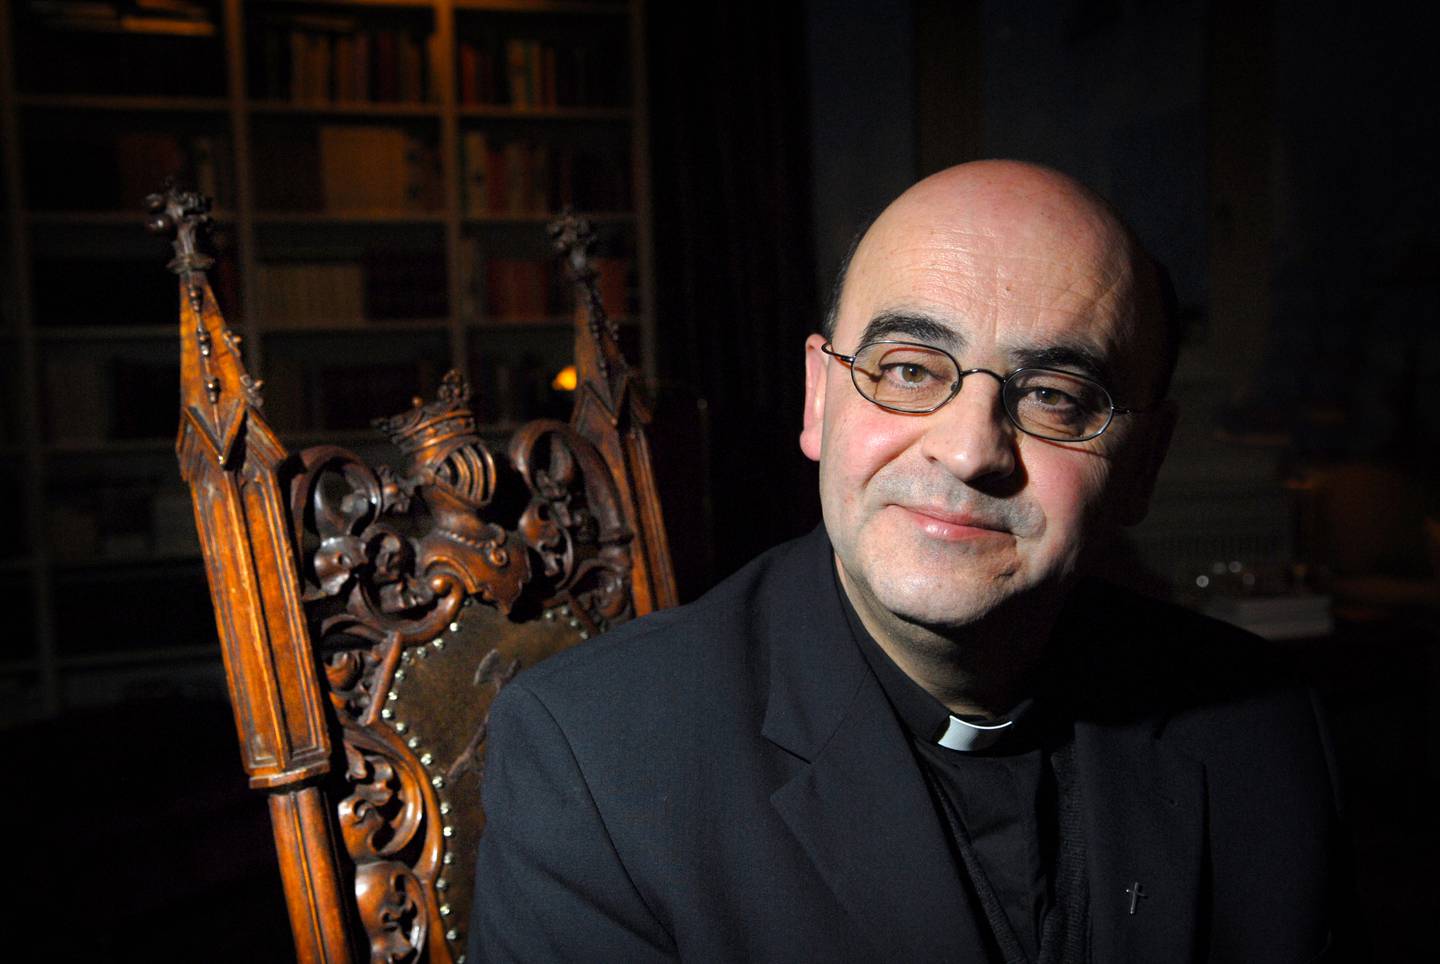 biskop berislav grgic den katolske kirke tromsø